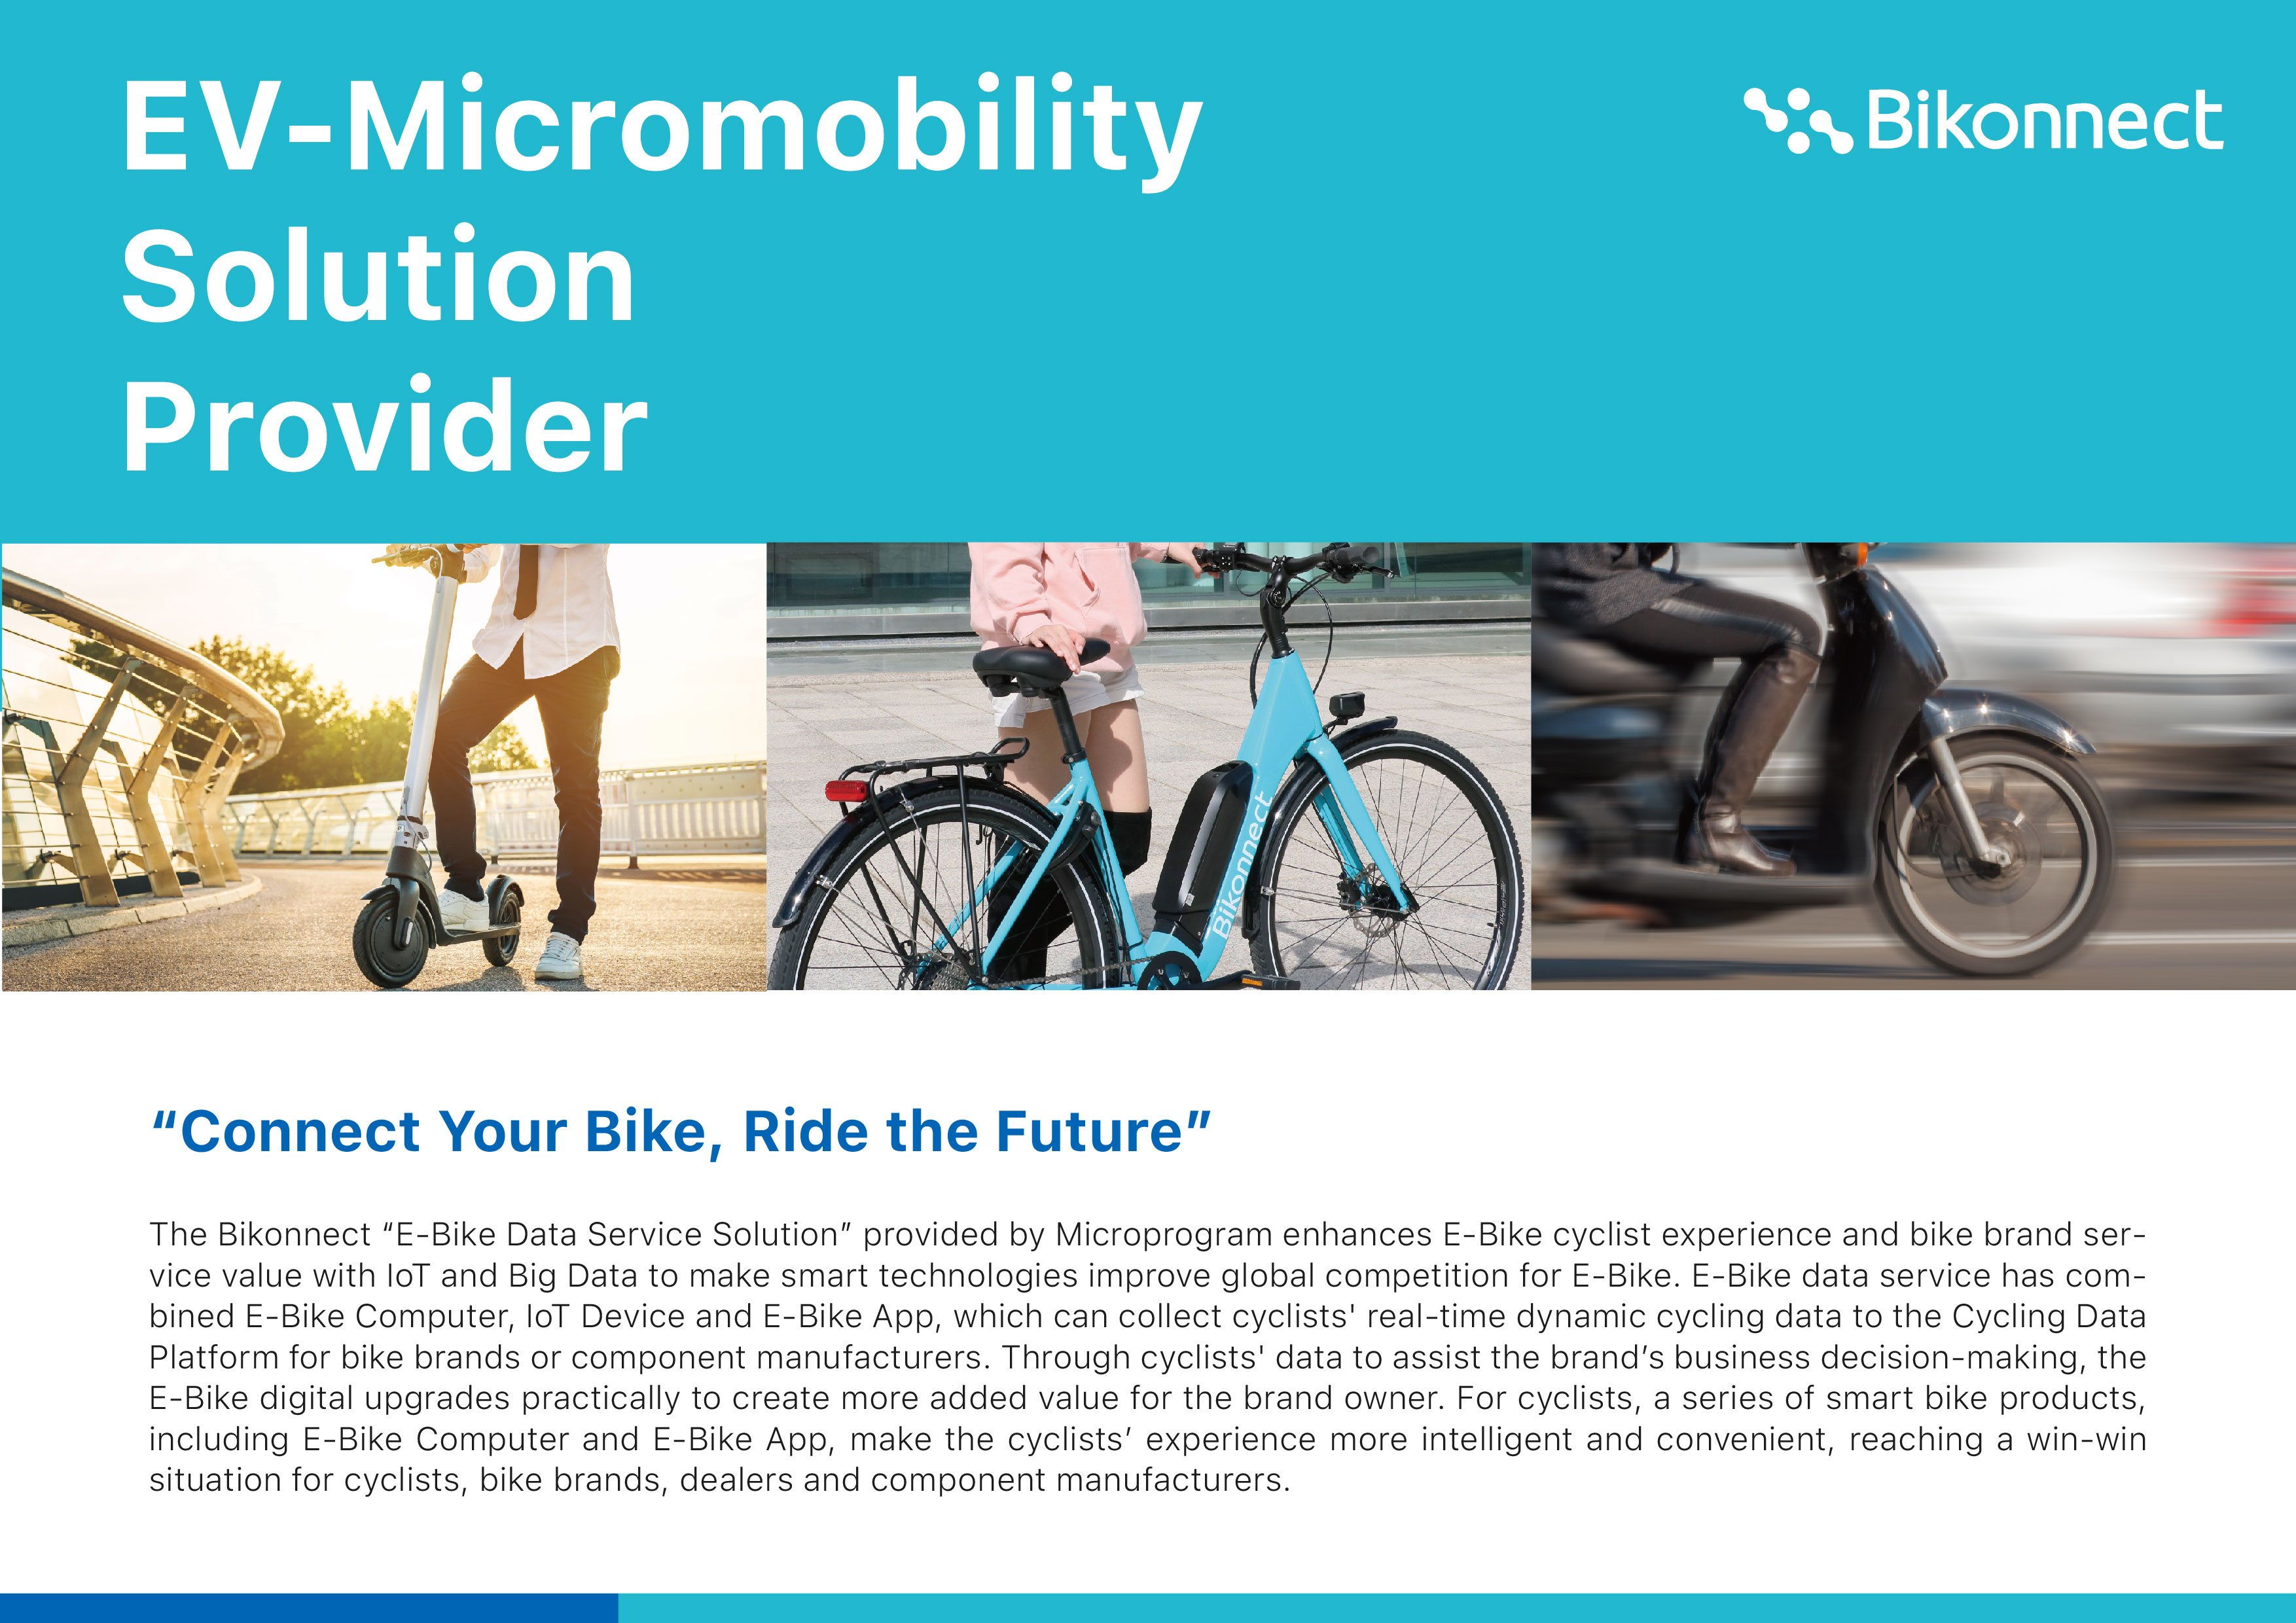 11. EV-Micromobility Solution Provider